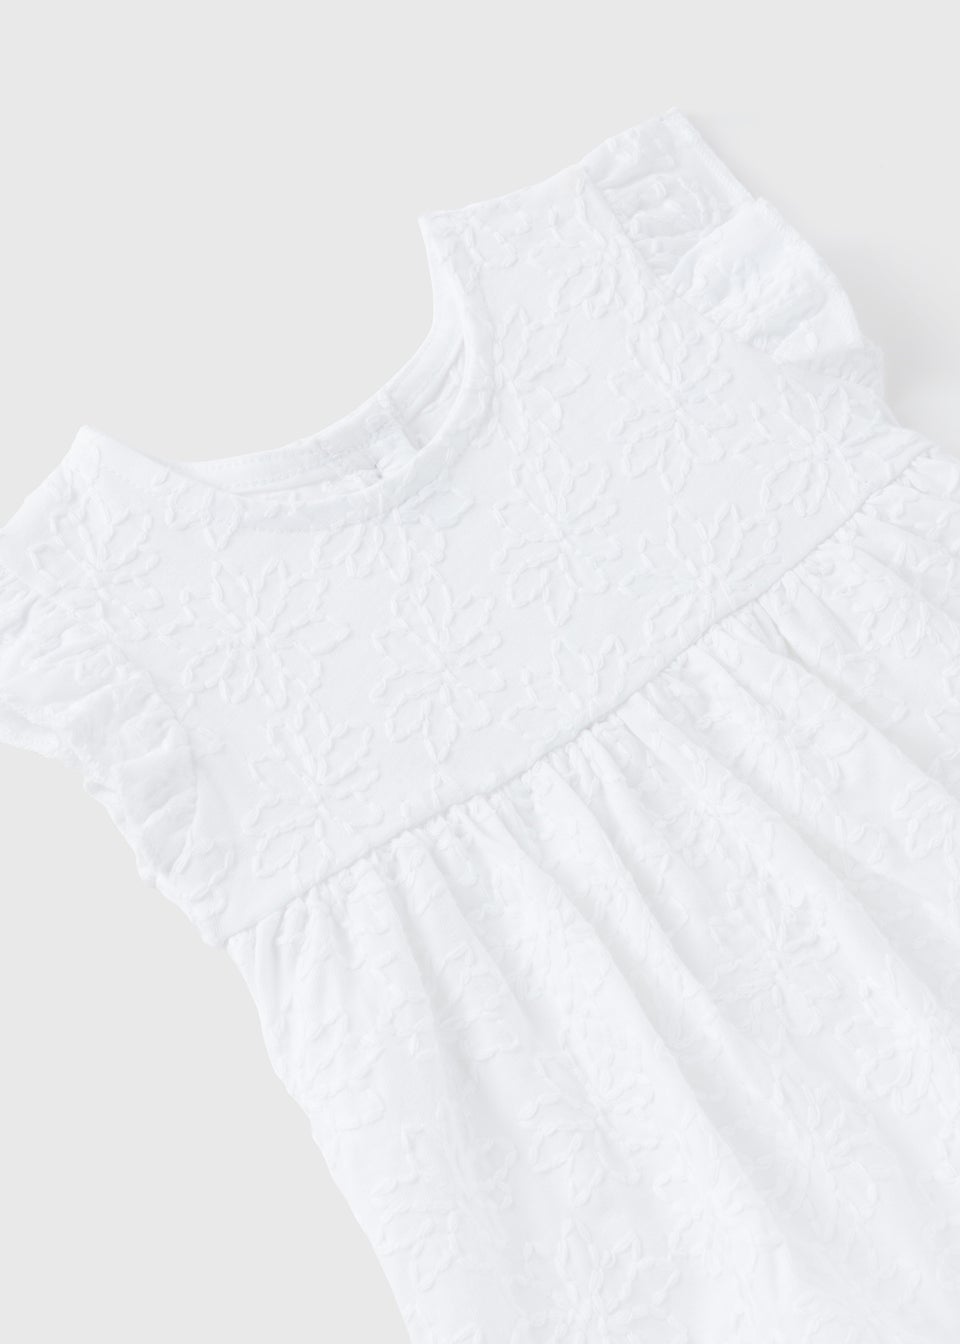 Baby White Embroidered Jersey Dress & Knickers Set (Newborn-23mths)